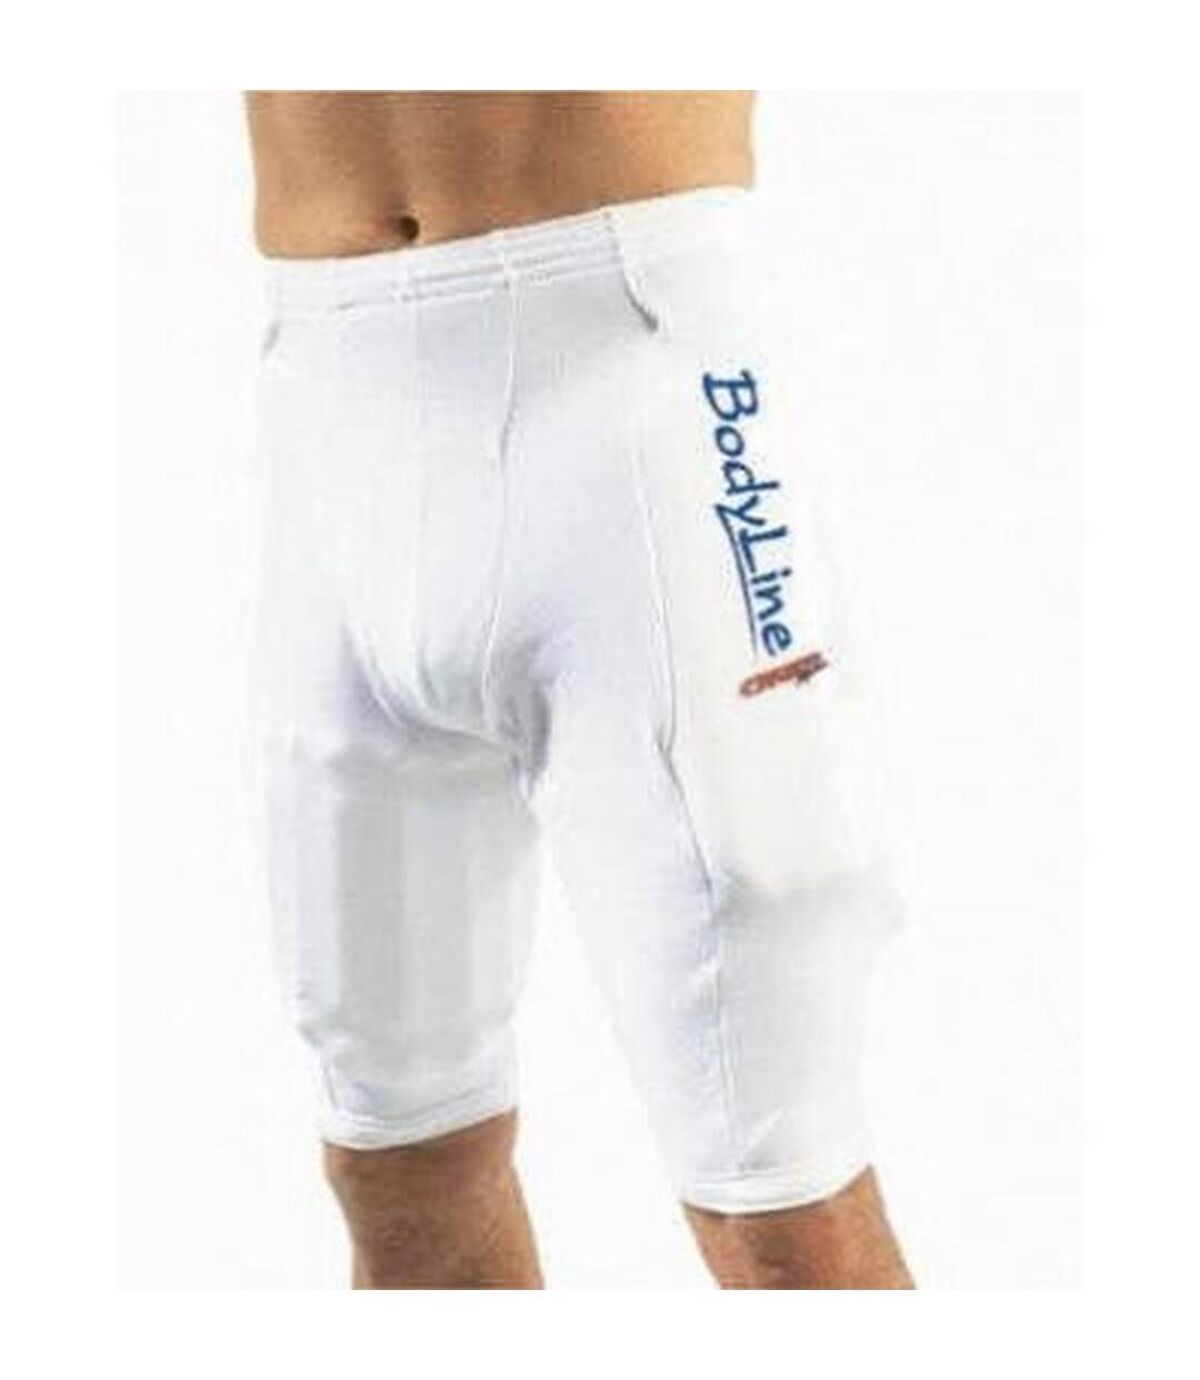 Carta Sport Mens Bodyline Cricket Protection Shorts (White/Blue)